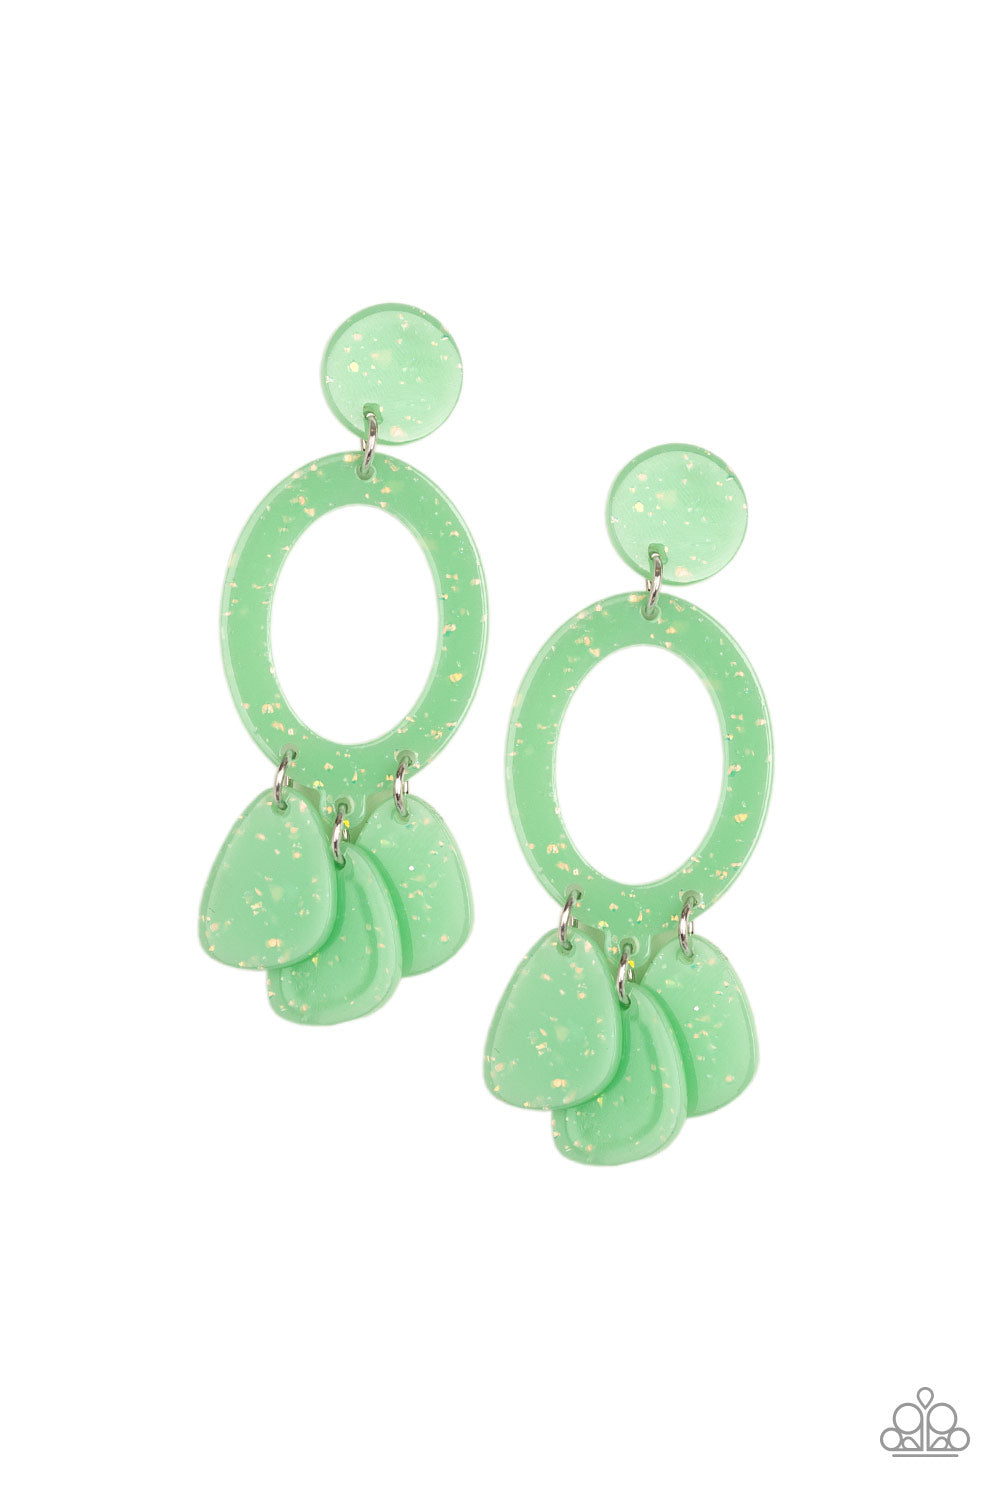 Sparkling Shores Green Paparazzi Earrings Cashmere Pink Jewels - Cashmere Pink Jewels & Accessories, Cashmere Pink Jewels & Accessories - Paparazzi